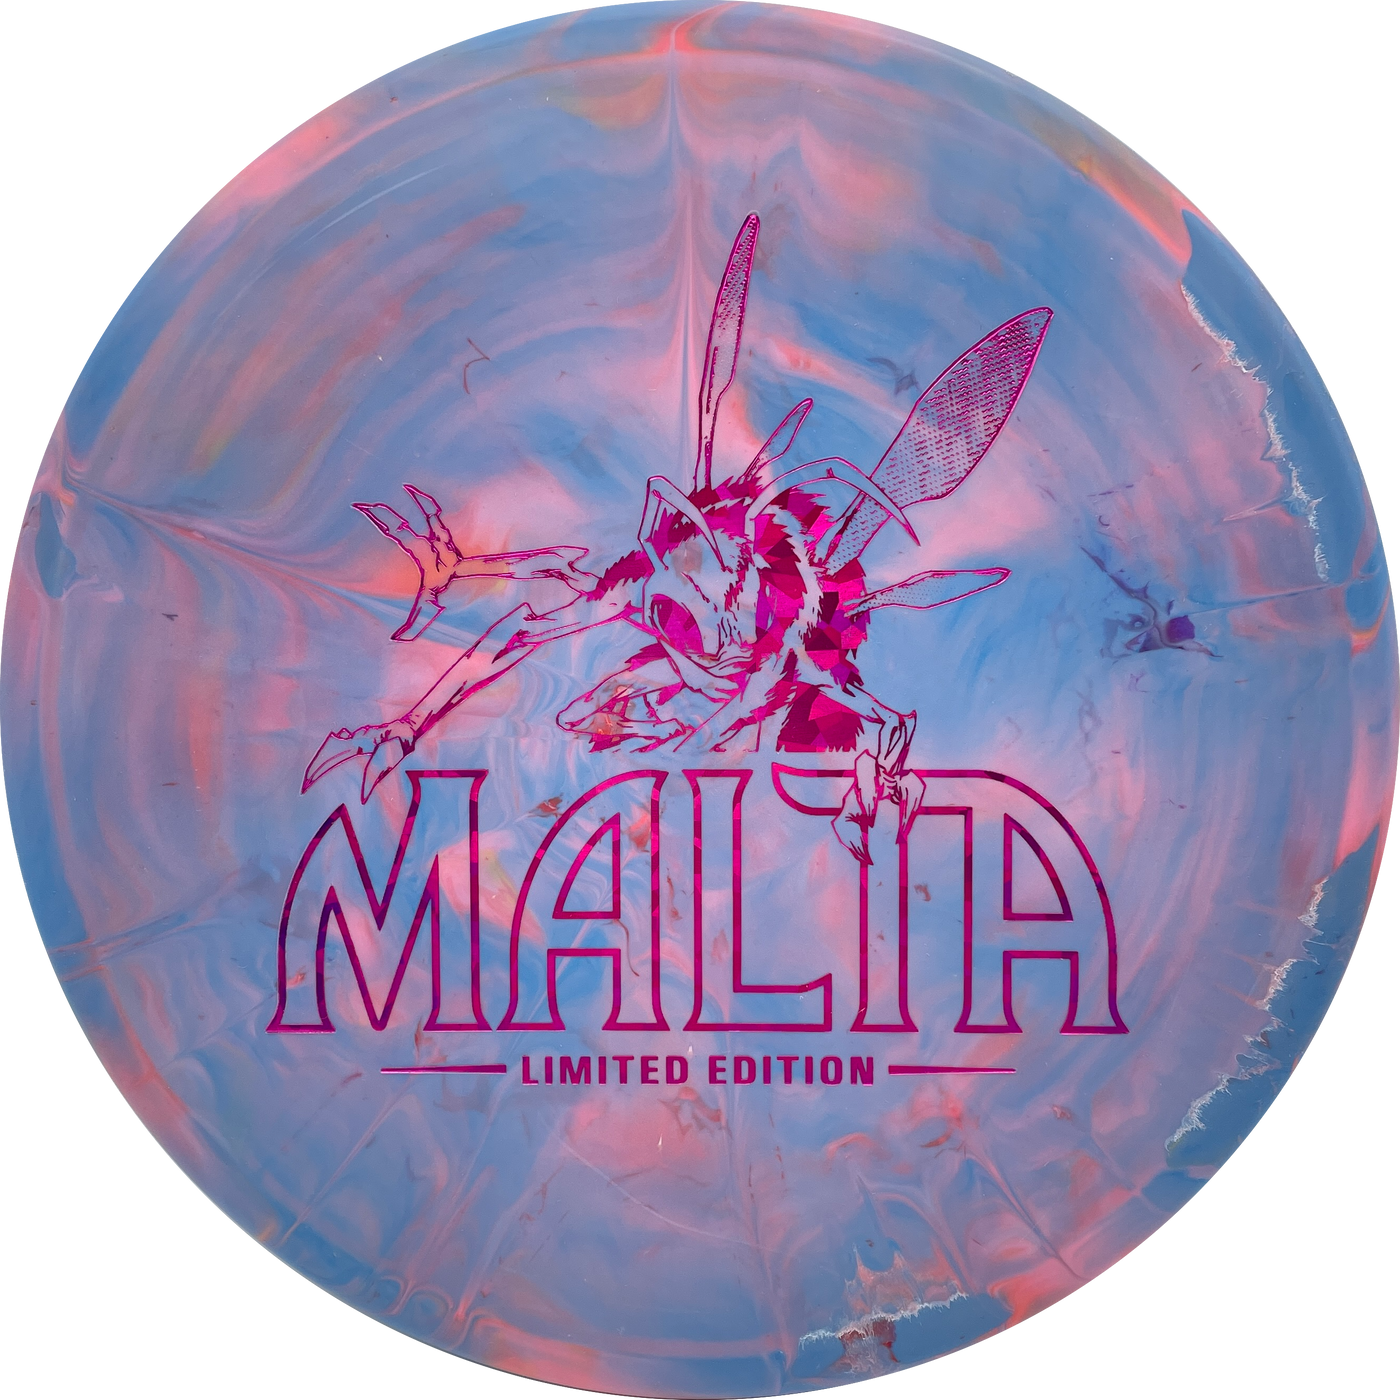 Jawbreaker Swirl Malta